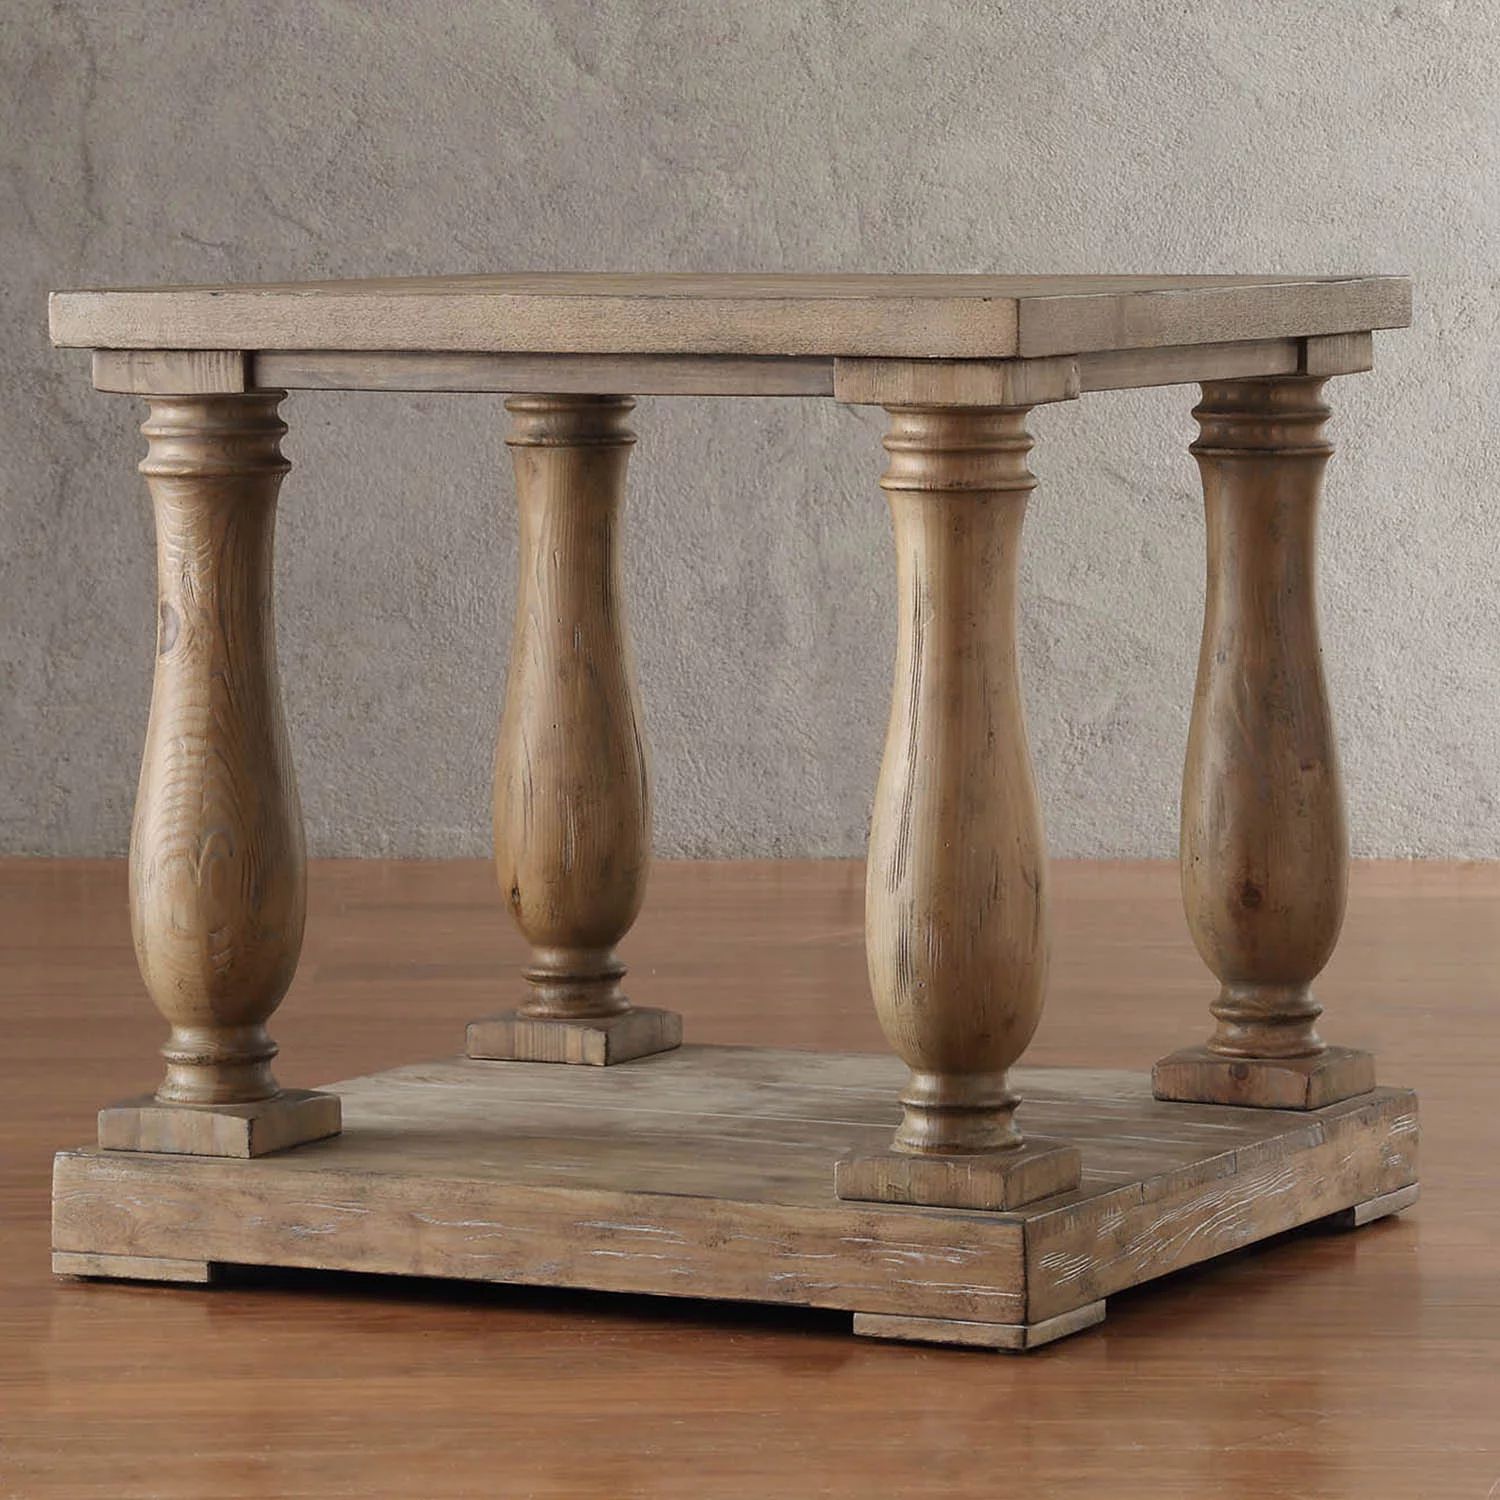 Weston Home Dunbar Pedestal End Table With Lower Storage Shelf, Pine Brown | Walmart (US)